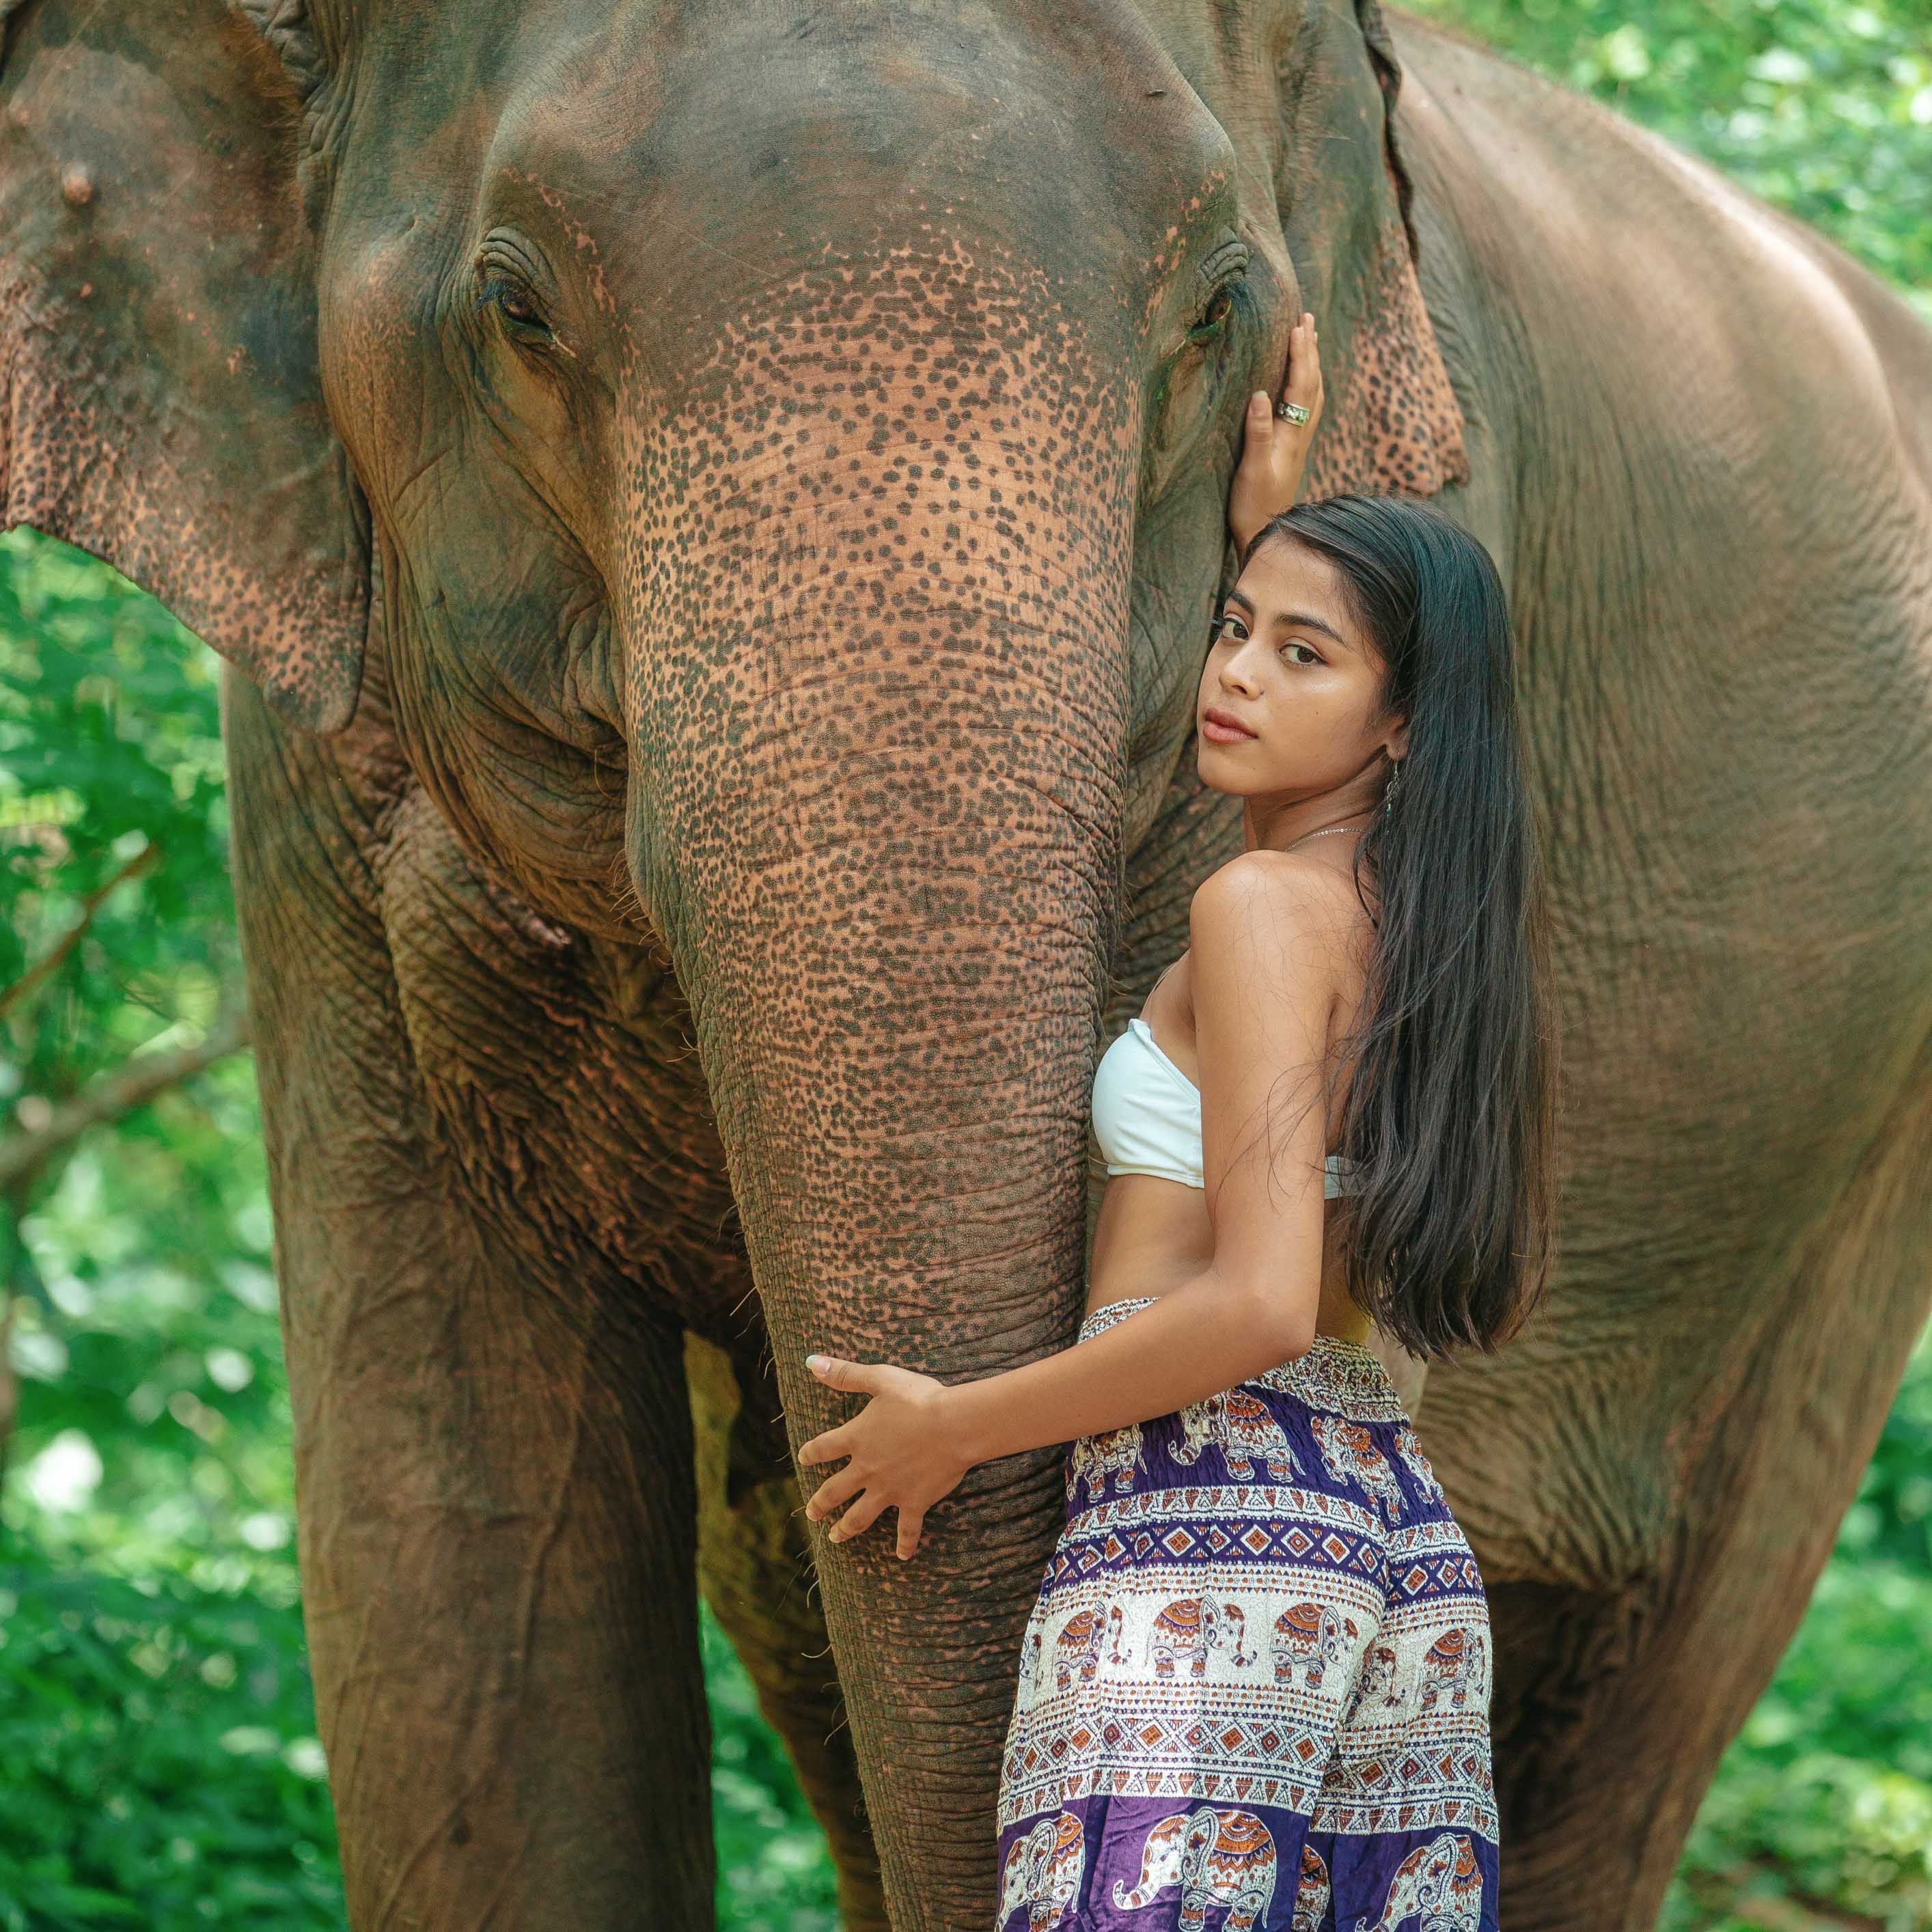 Angkor Elephant Pants - PURPLE Elepanta Women's Pants - Buy Today Elephant Pants Jewelry And Bohemian Clothes Handmade In Thailand Help To Save The Elephants FairTrade And Vegan